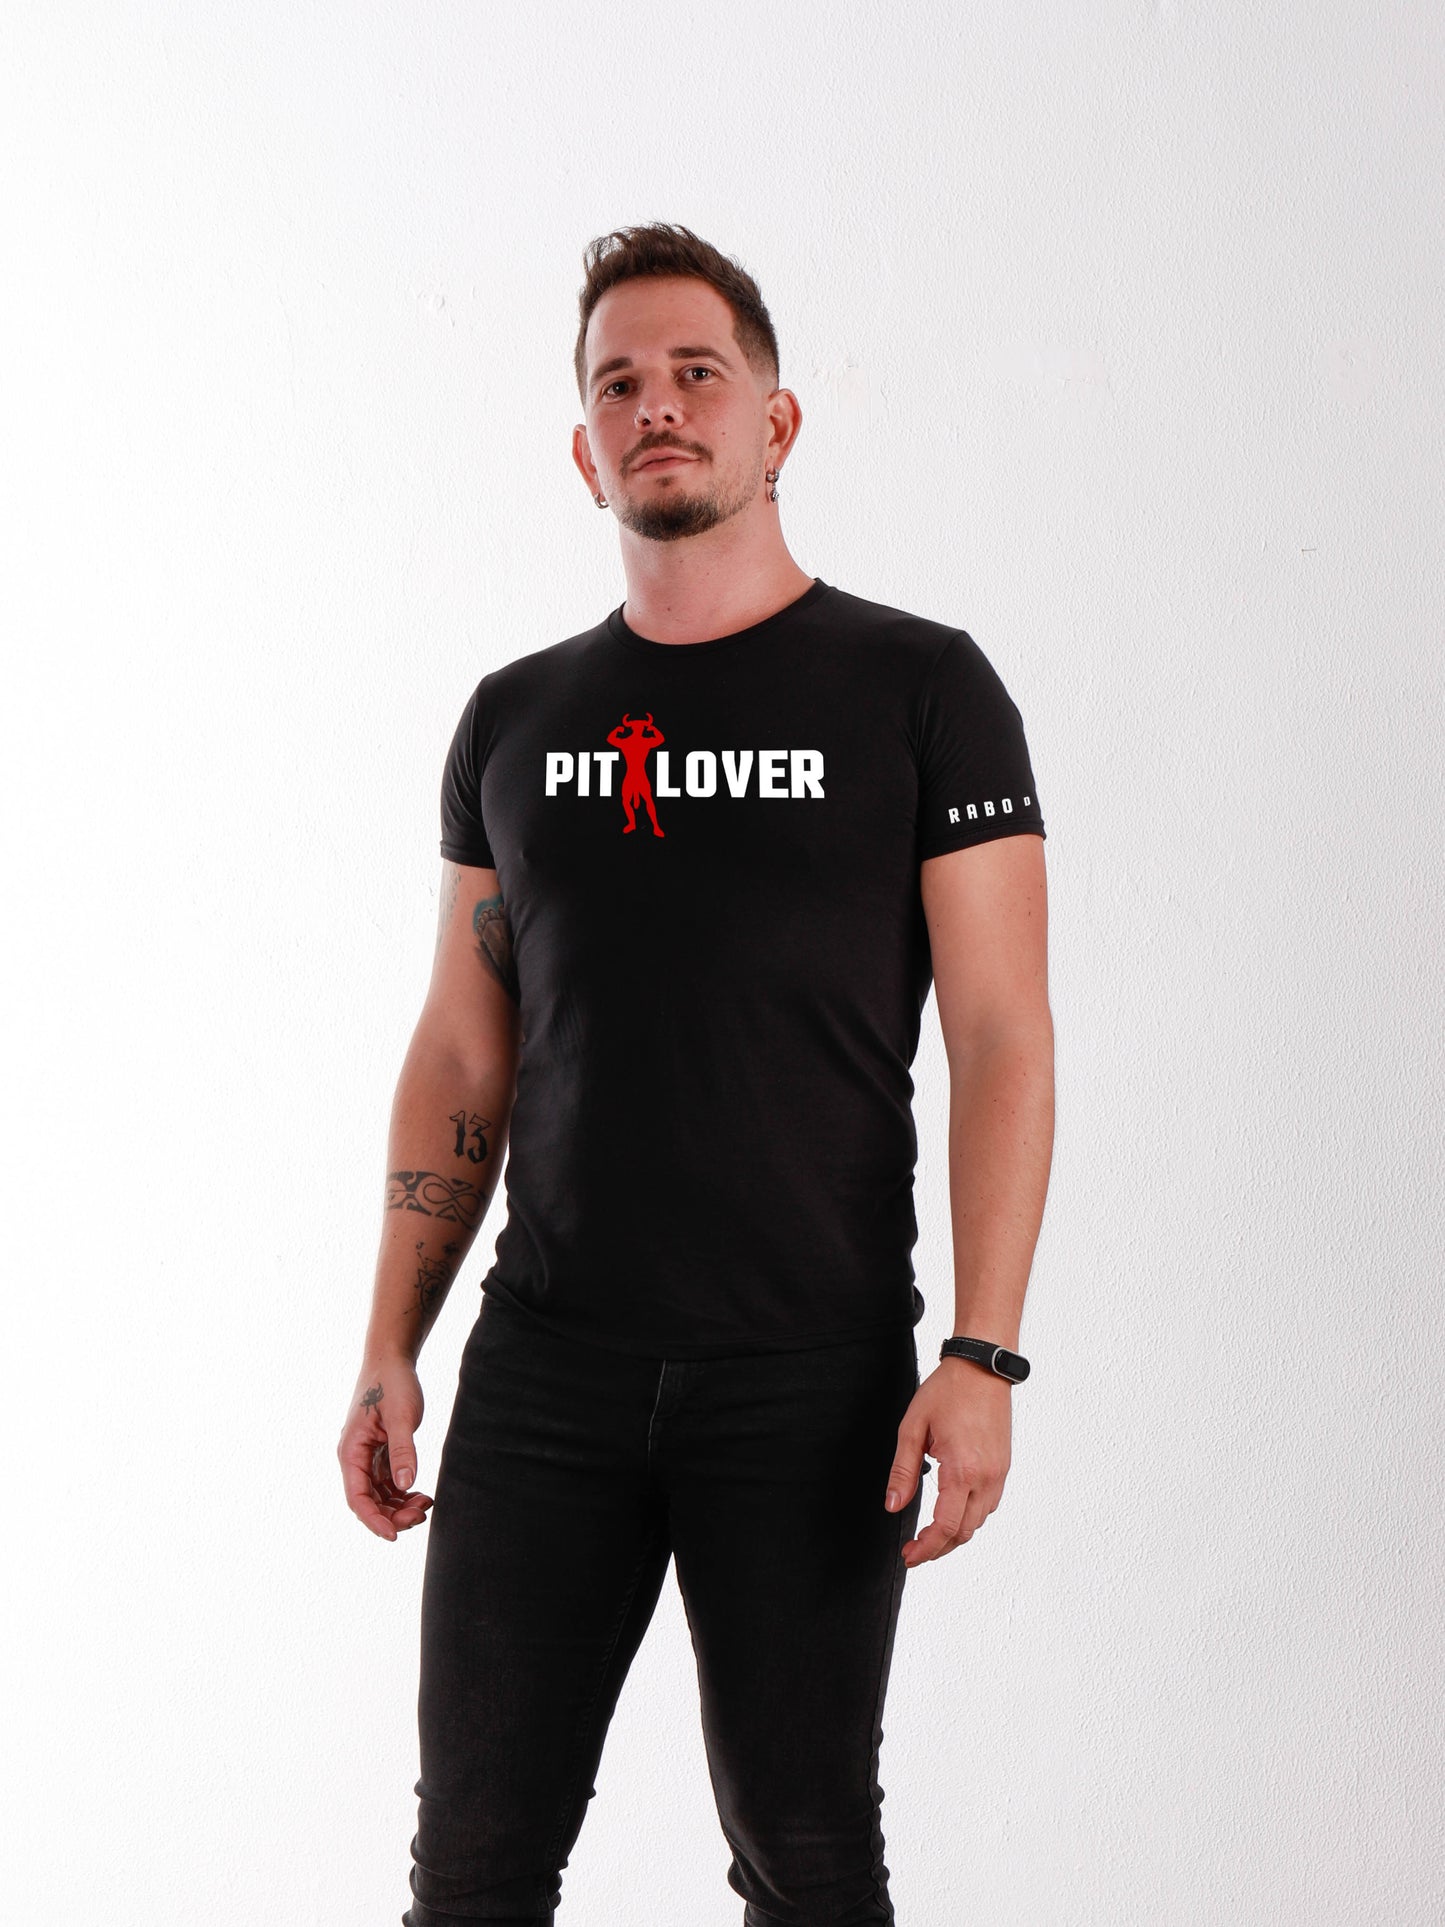 PIT LOVER T-Shirt with Minotaur Pit Lover Fetish design